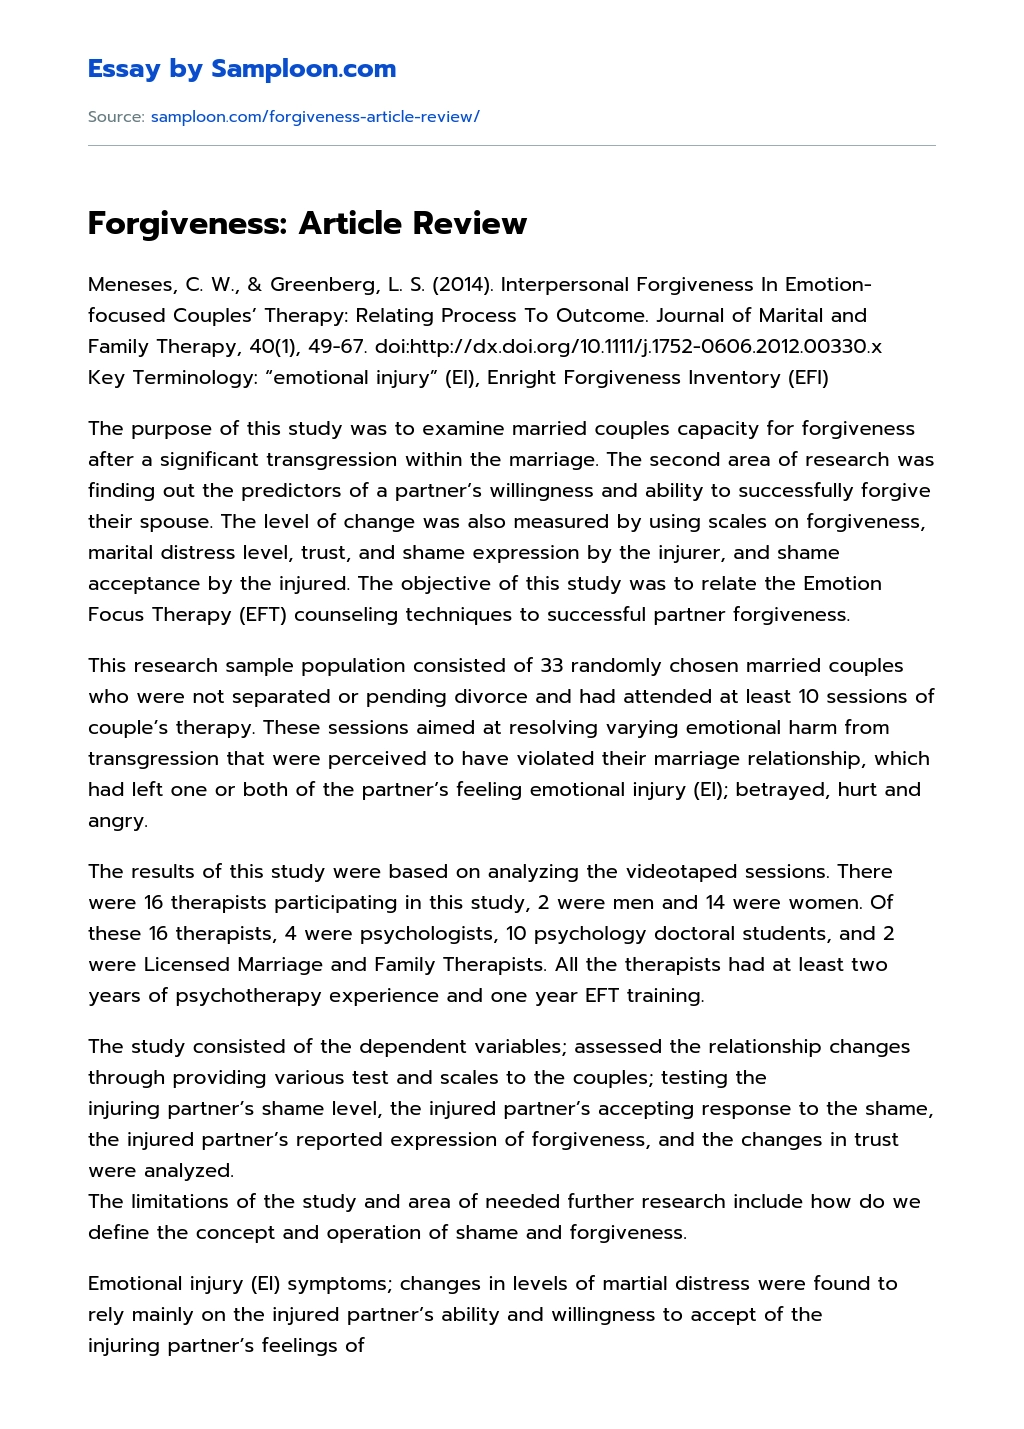 Forgiveness: Article Review essay